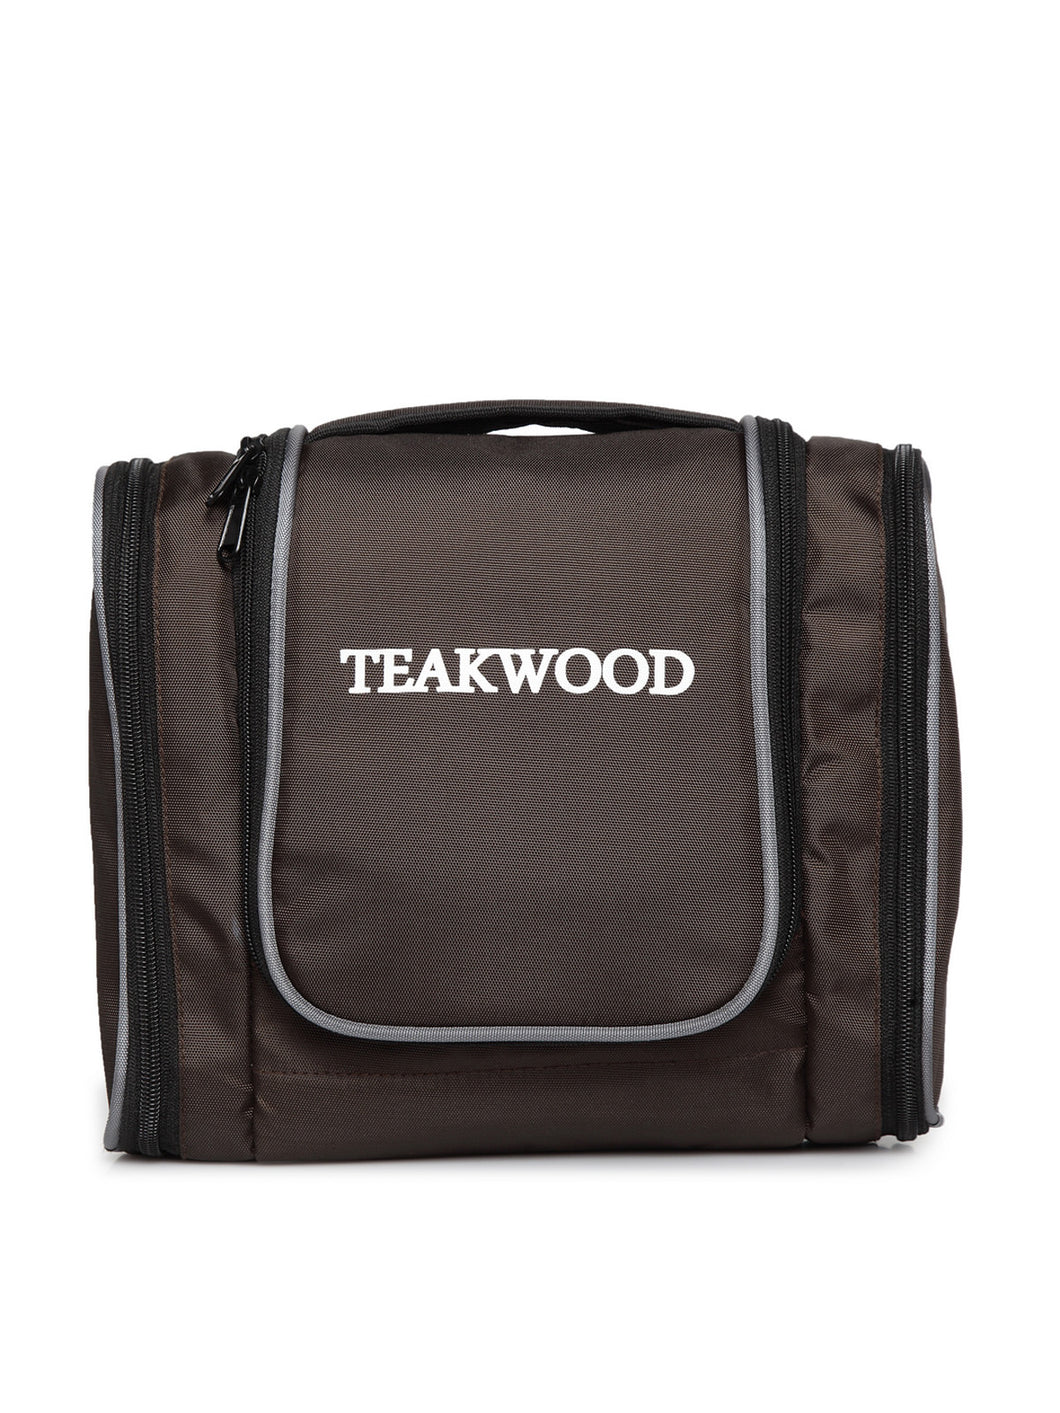 Teakwood Leathers Unisex Brown Solid Toiletry Kit